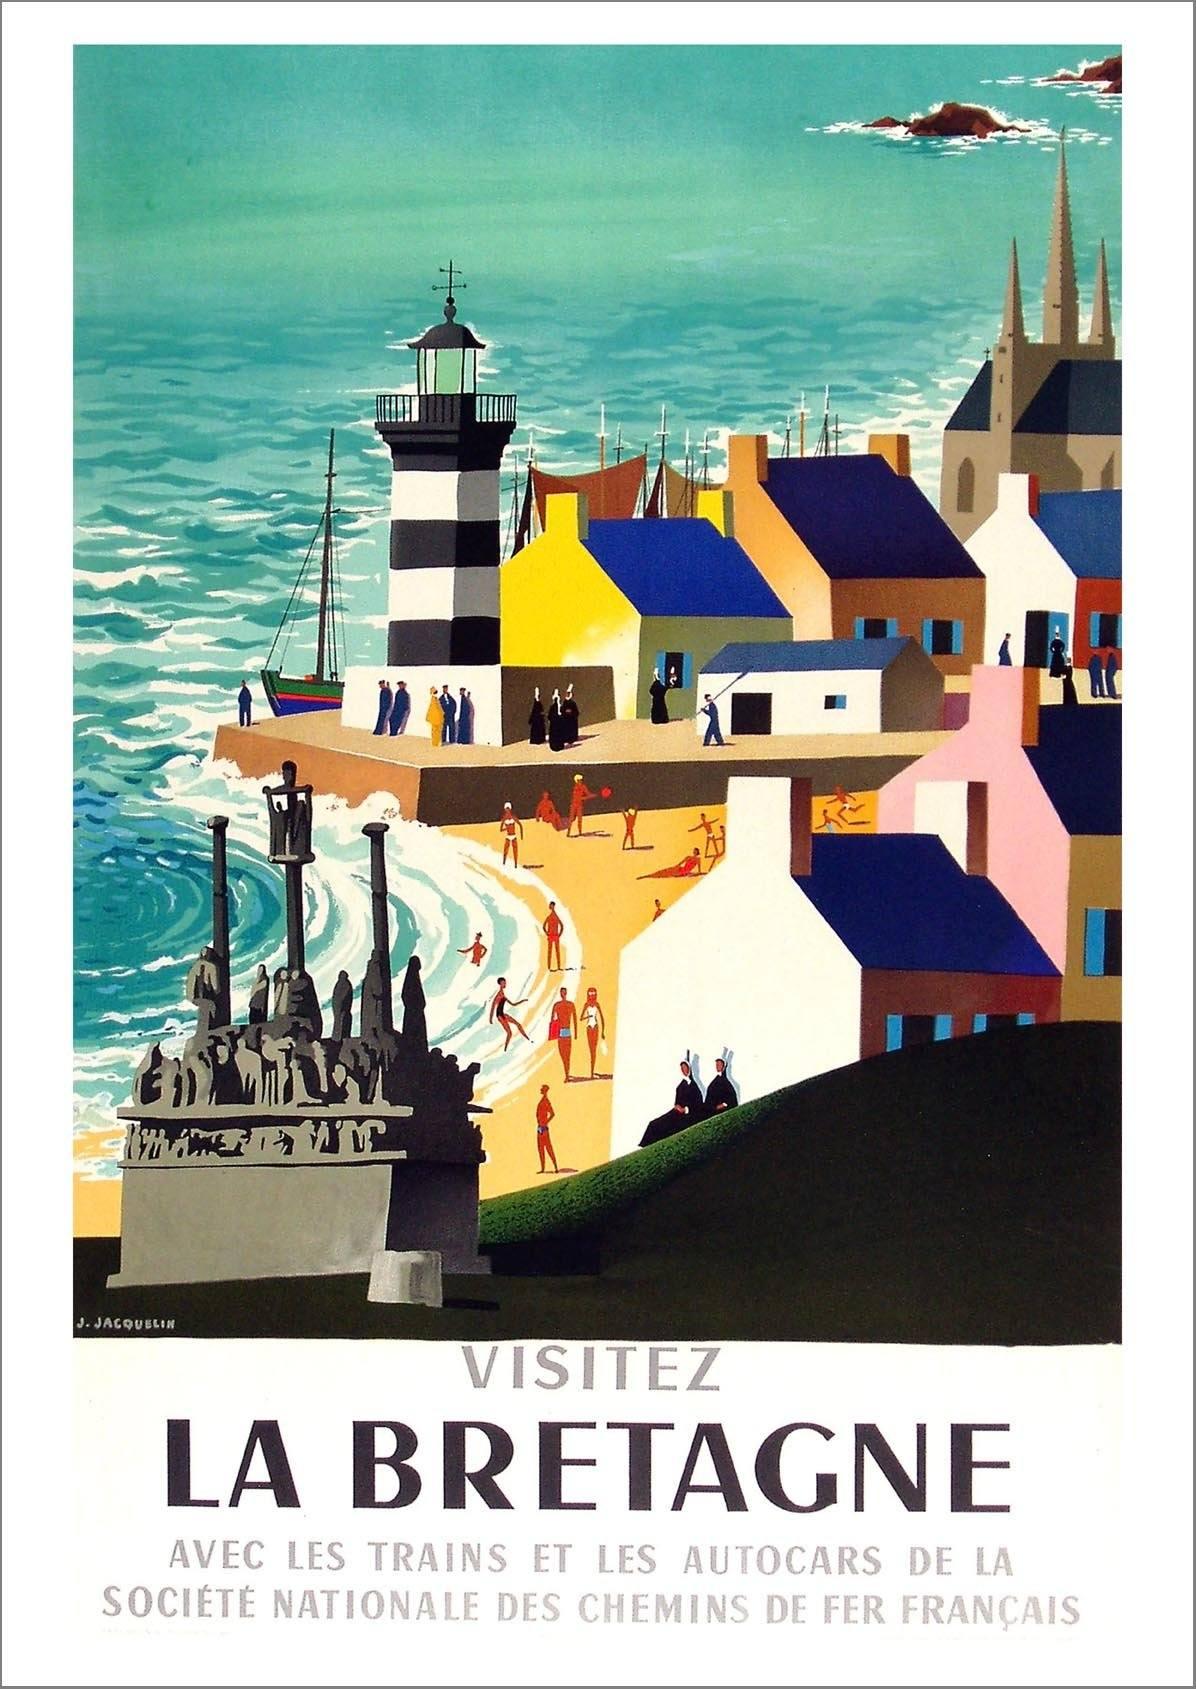 LA BRETAGNE POSTER: Vintage French Tourism Advert Print - Pimlico Prints